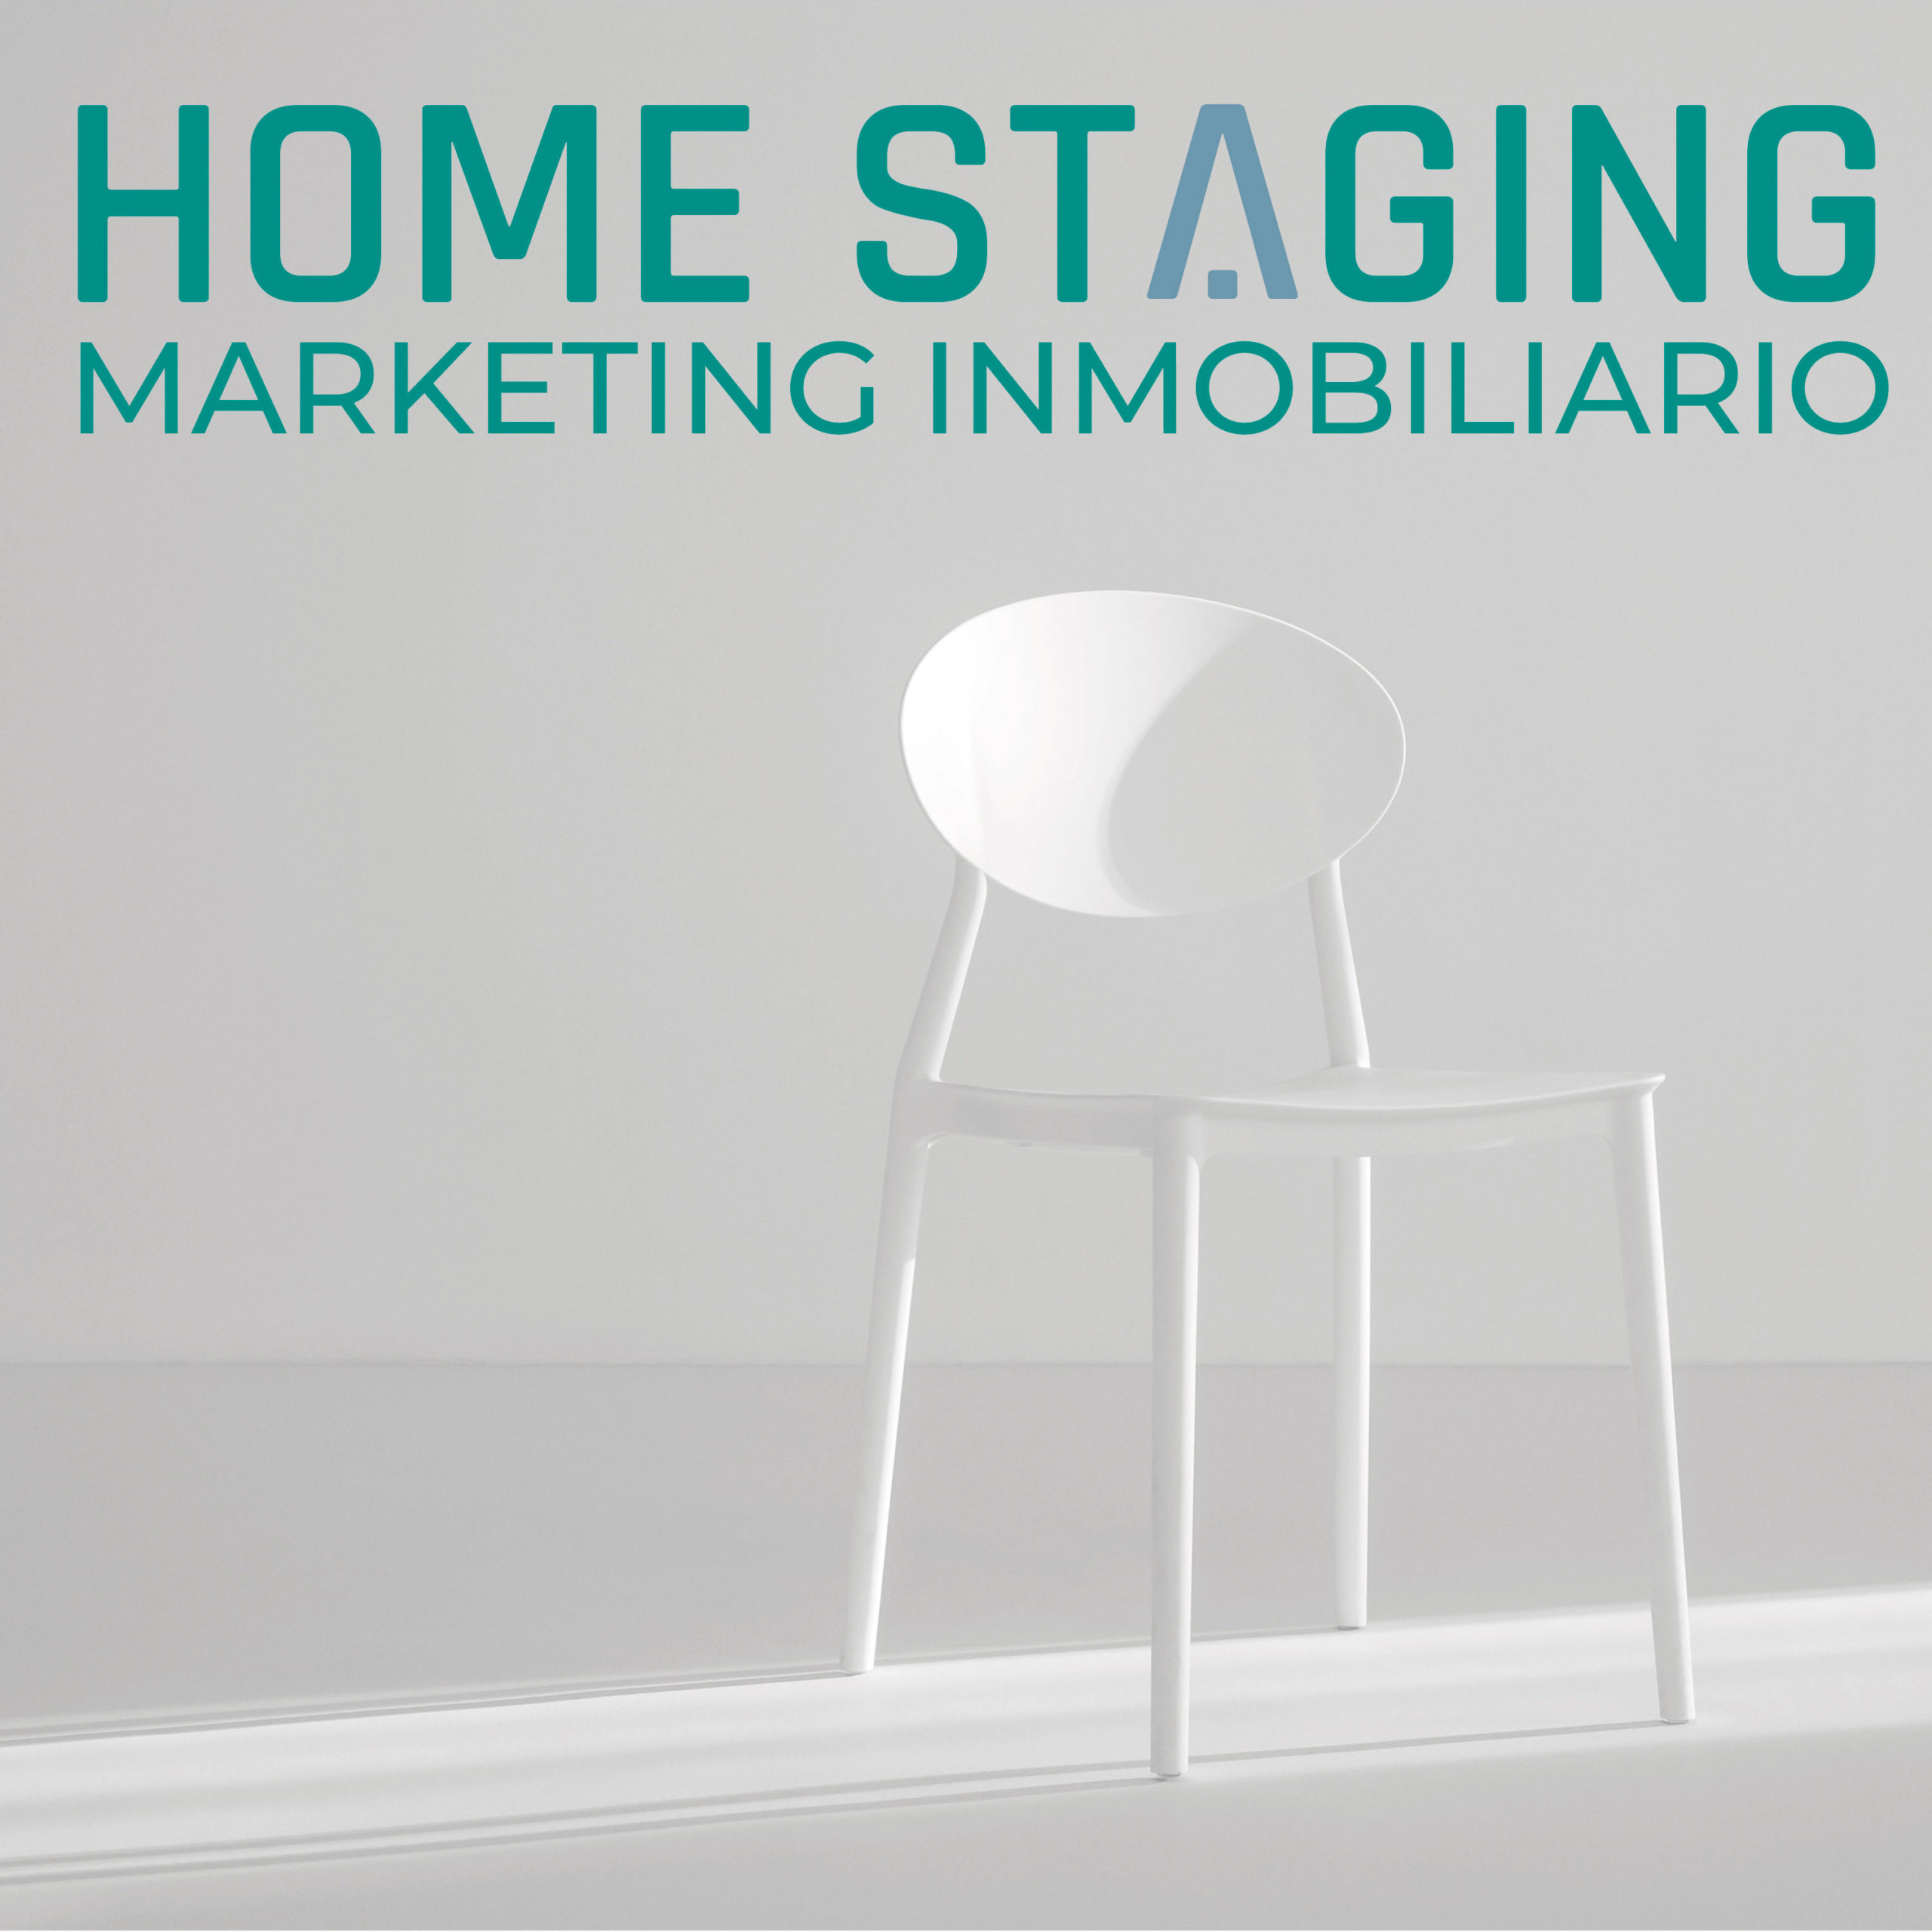 Home Staging - Marketing inmobiliario